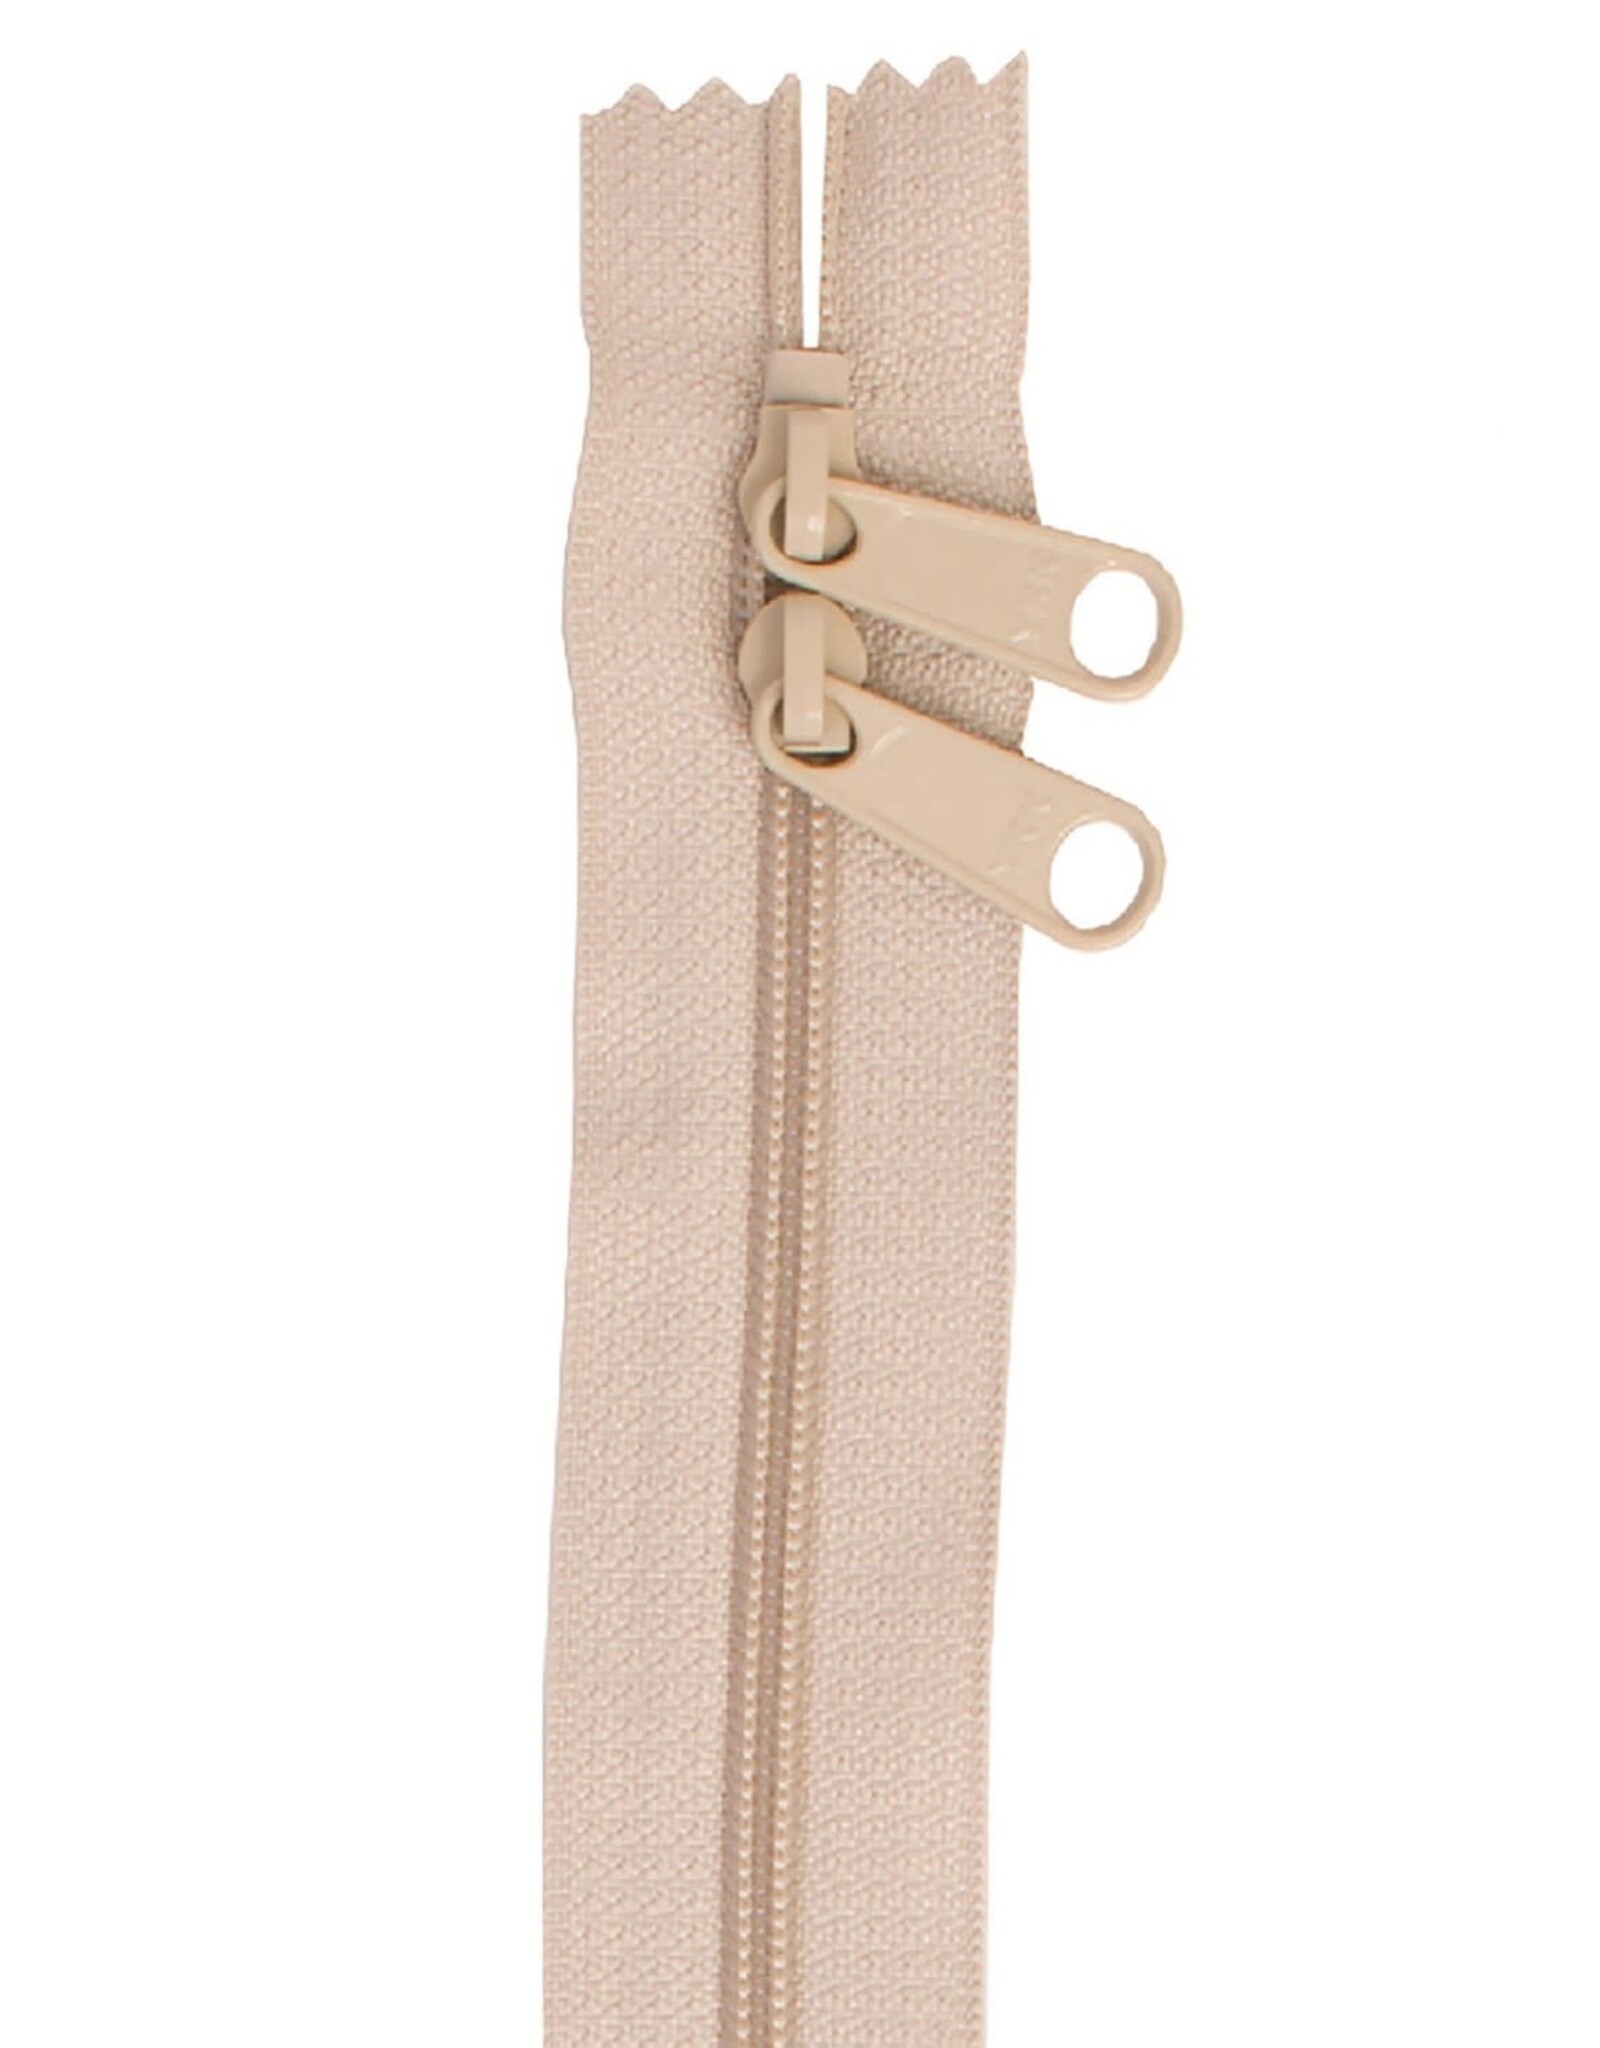 ByAnnie Handbag Zipper - 40 inch / 101 cm - double slide - Natural